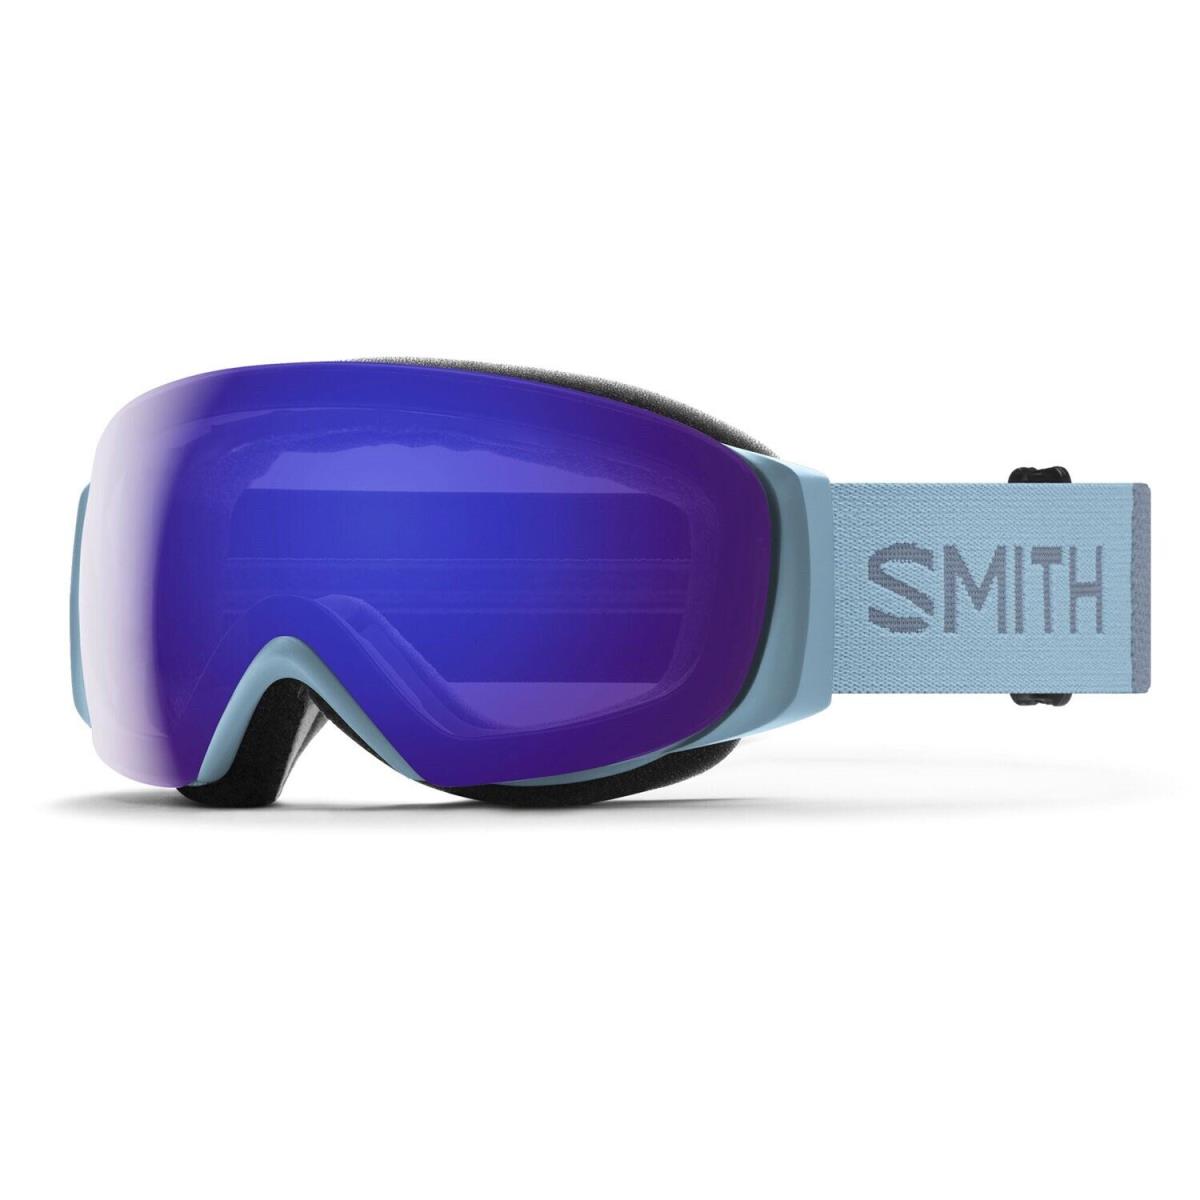 Smith I/o Mag S Ski / Snow Goggles Glacier Everyday Violet Mirror Lens + Bonus - Frame: Blue